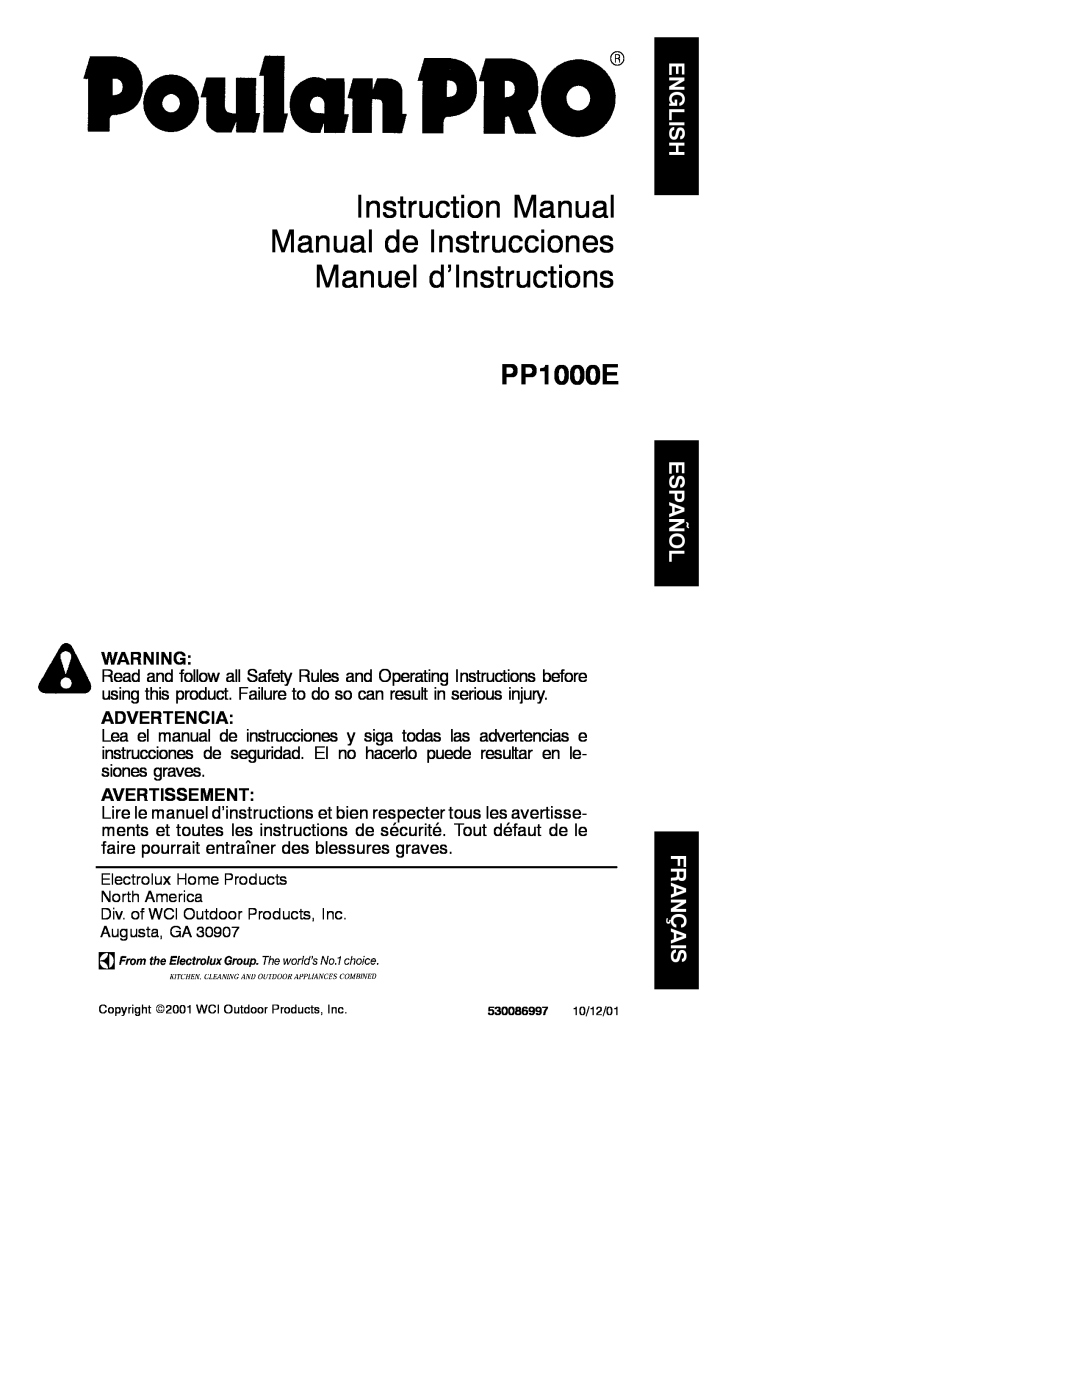 Poulan instruction manual Advertencia, Avertissement, PP1000E 